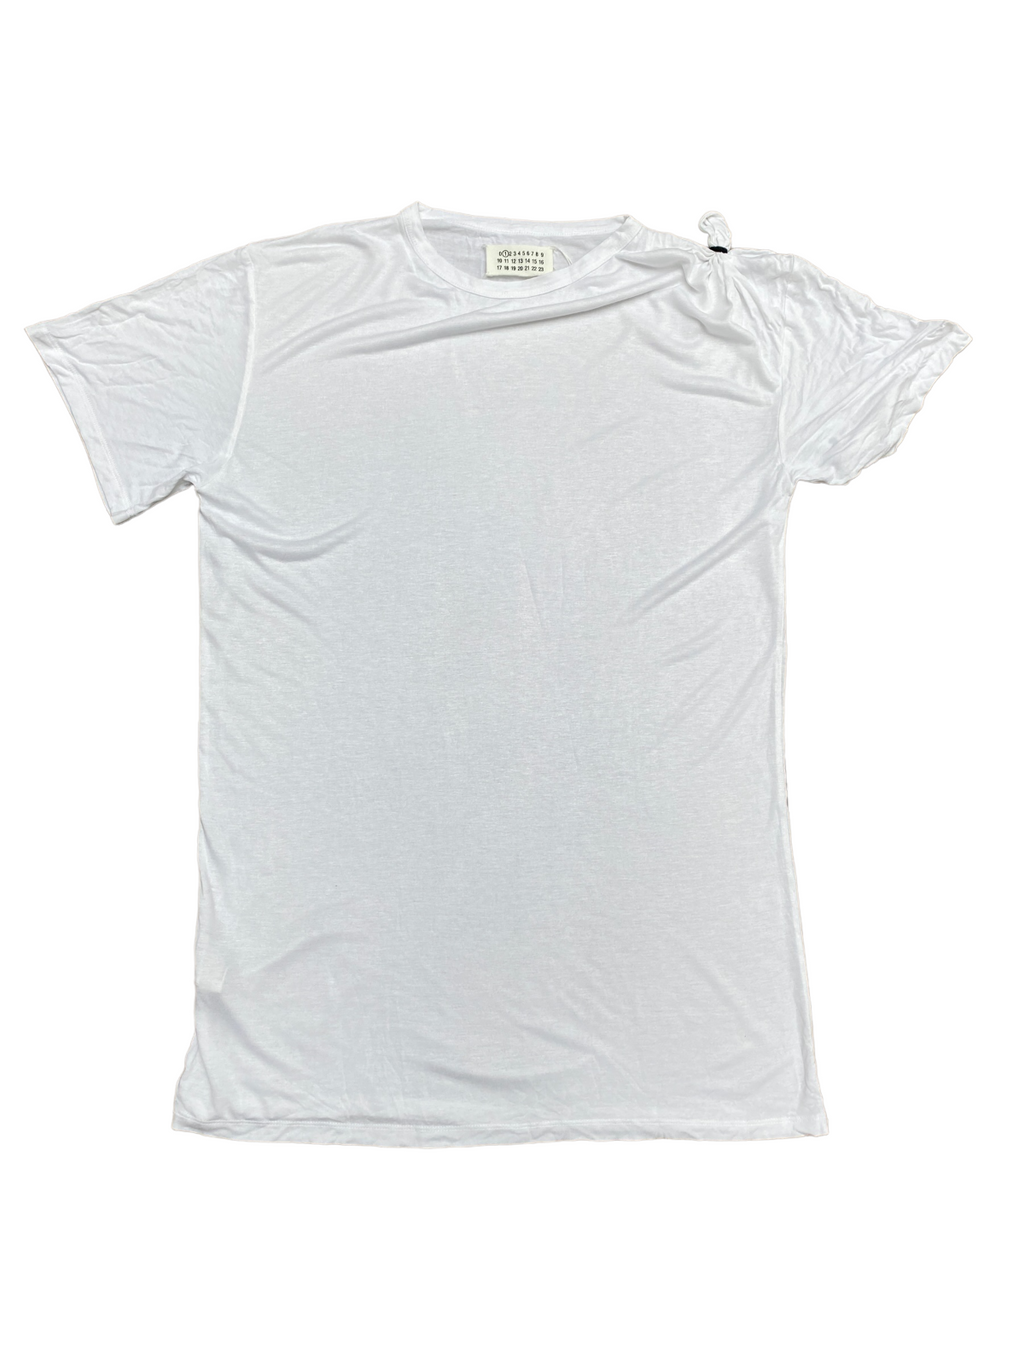 Rare Baloon White T-shirt